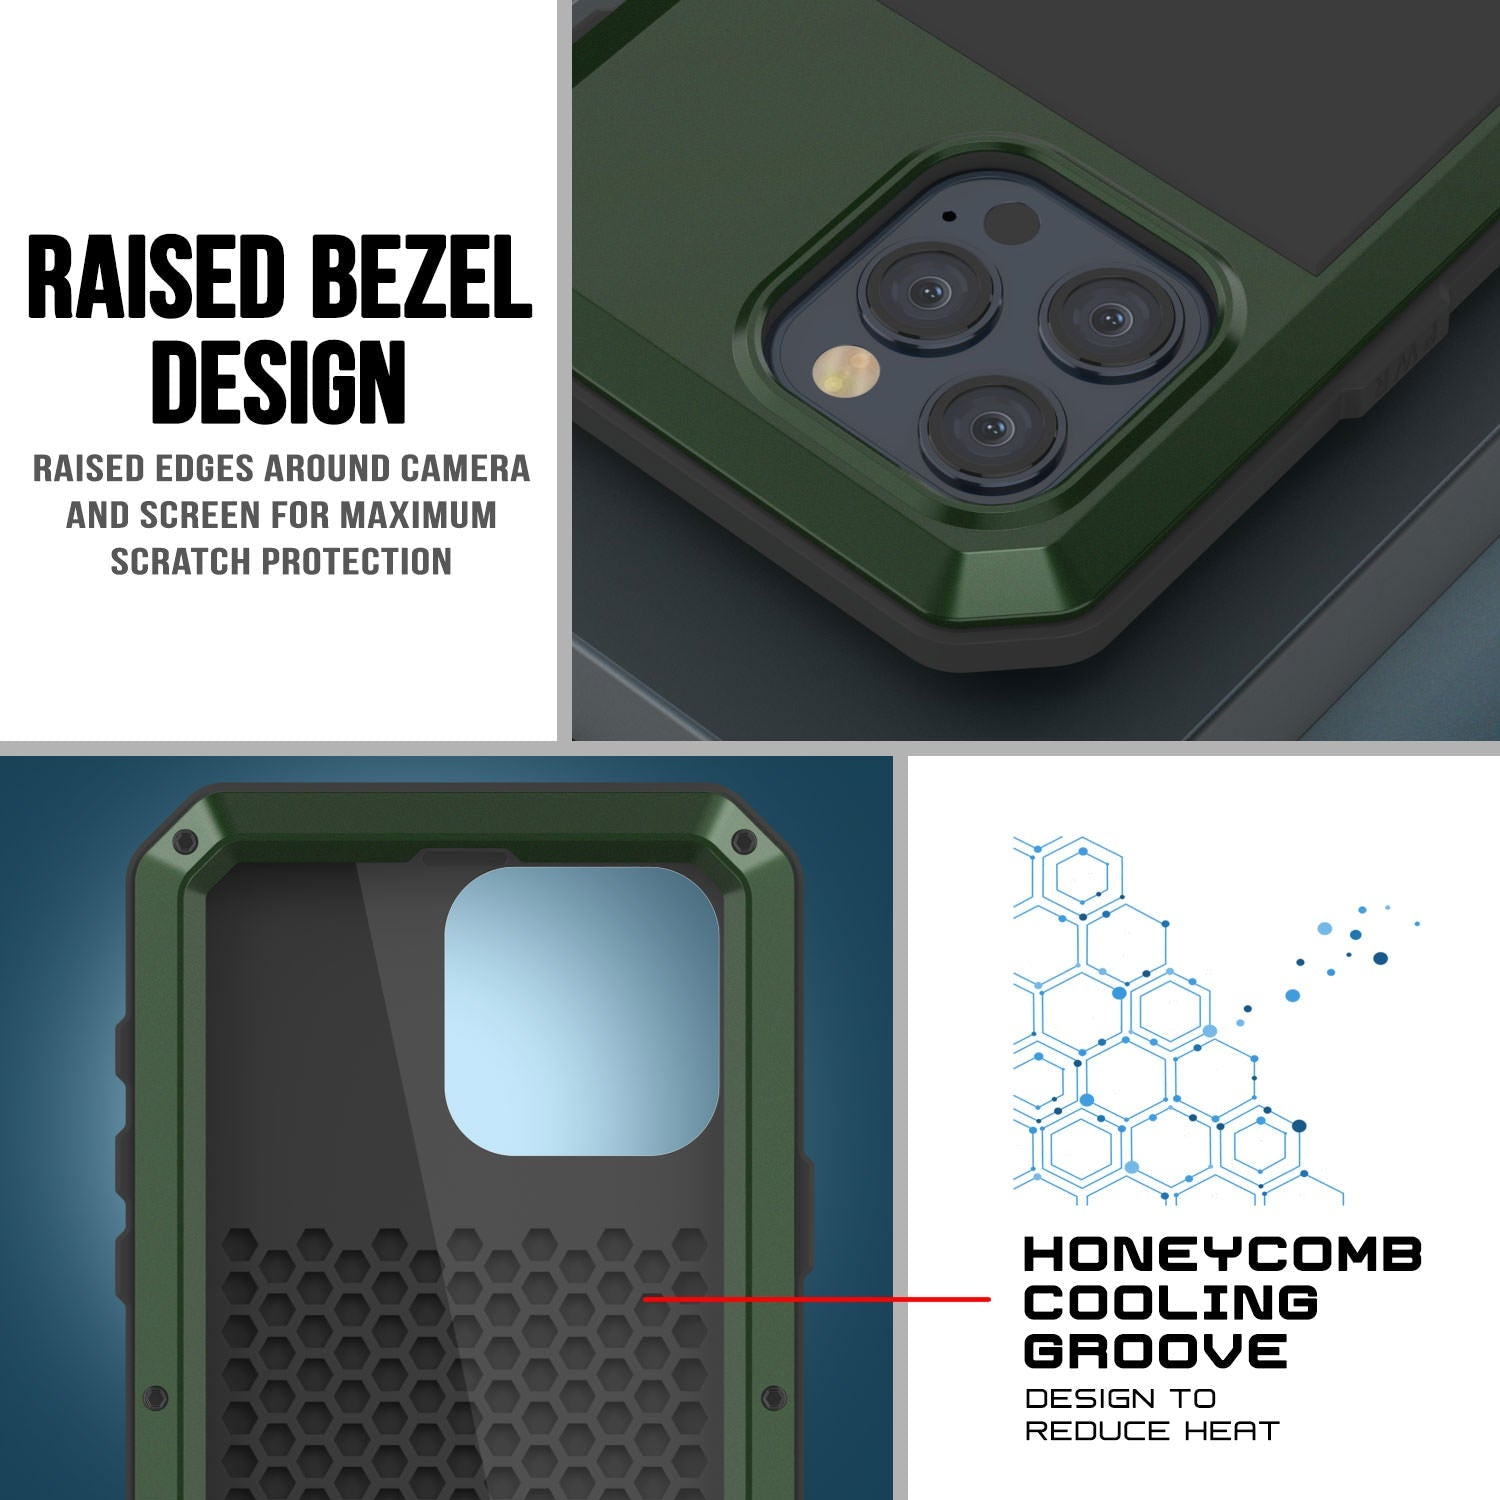 iPhone 15 Pro Max Metal Case, Heavy Duty Military Grade Armor Cover [shock proof] Full Body Hard [Dark Green]